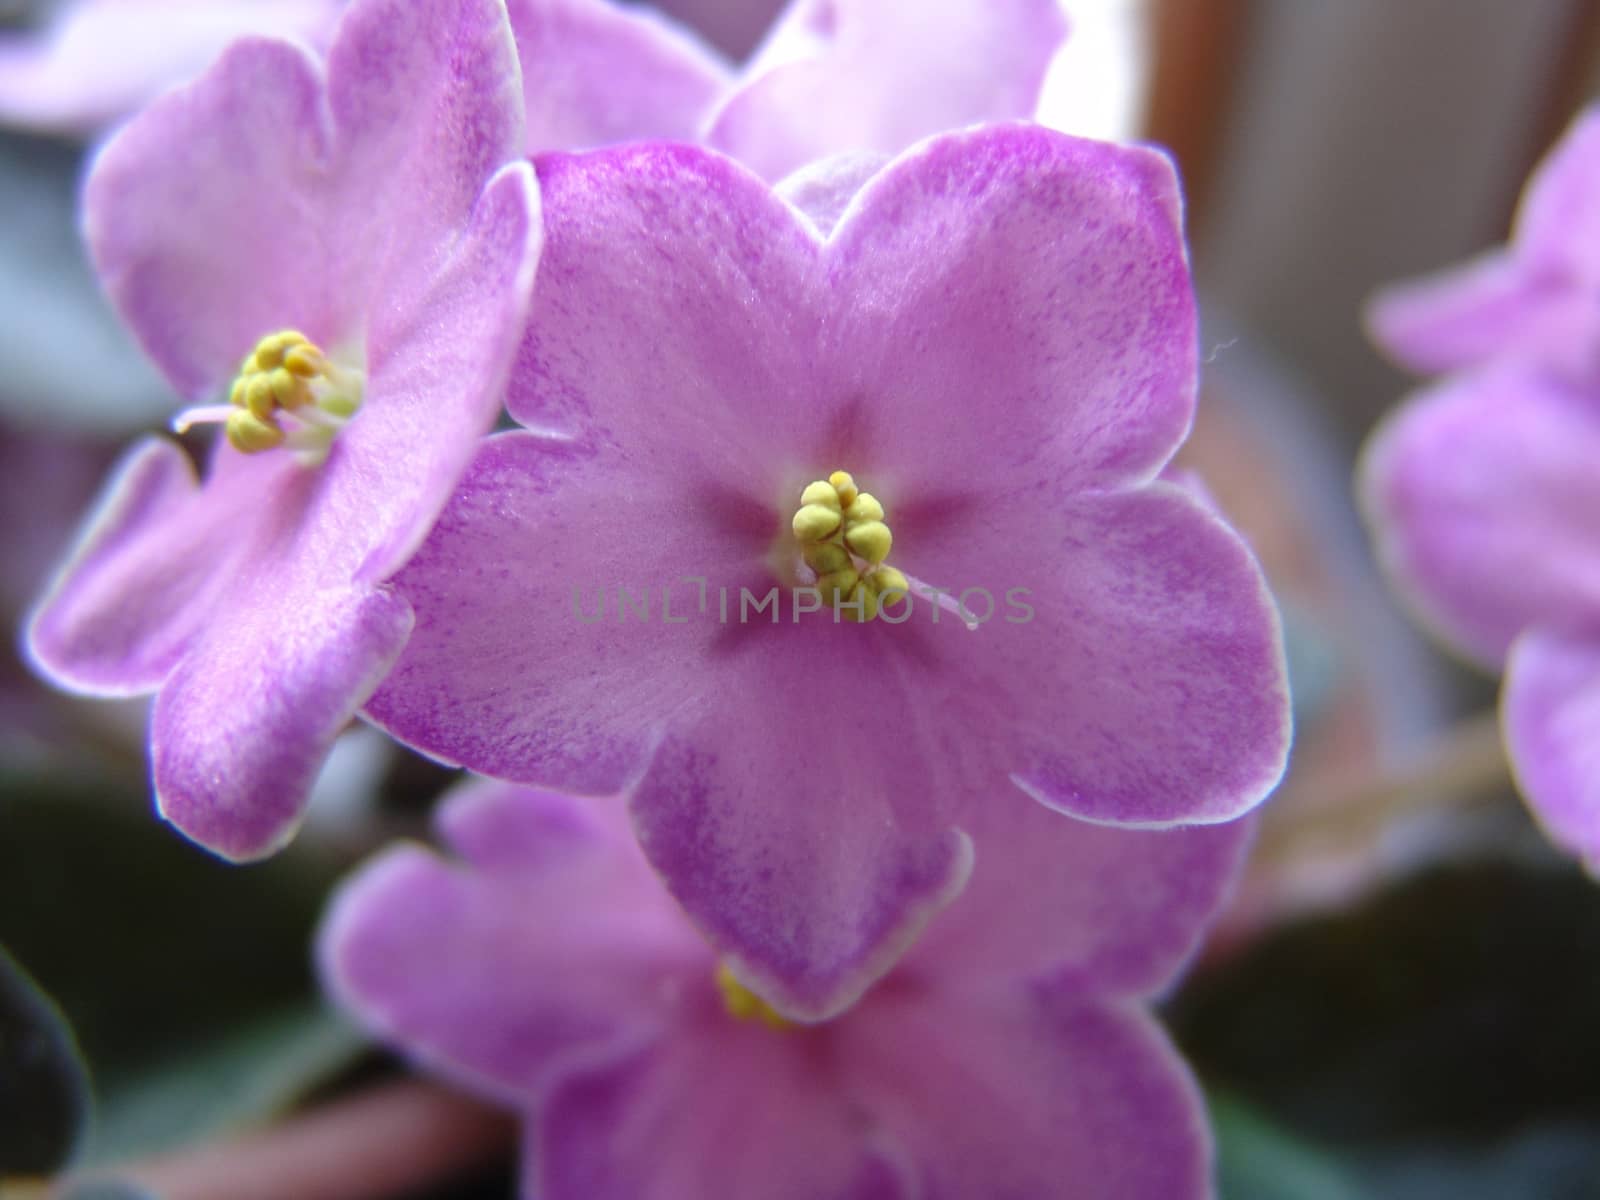 Beautiful  Violet Flowers